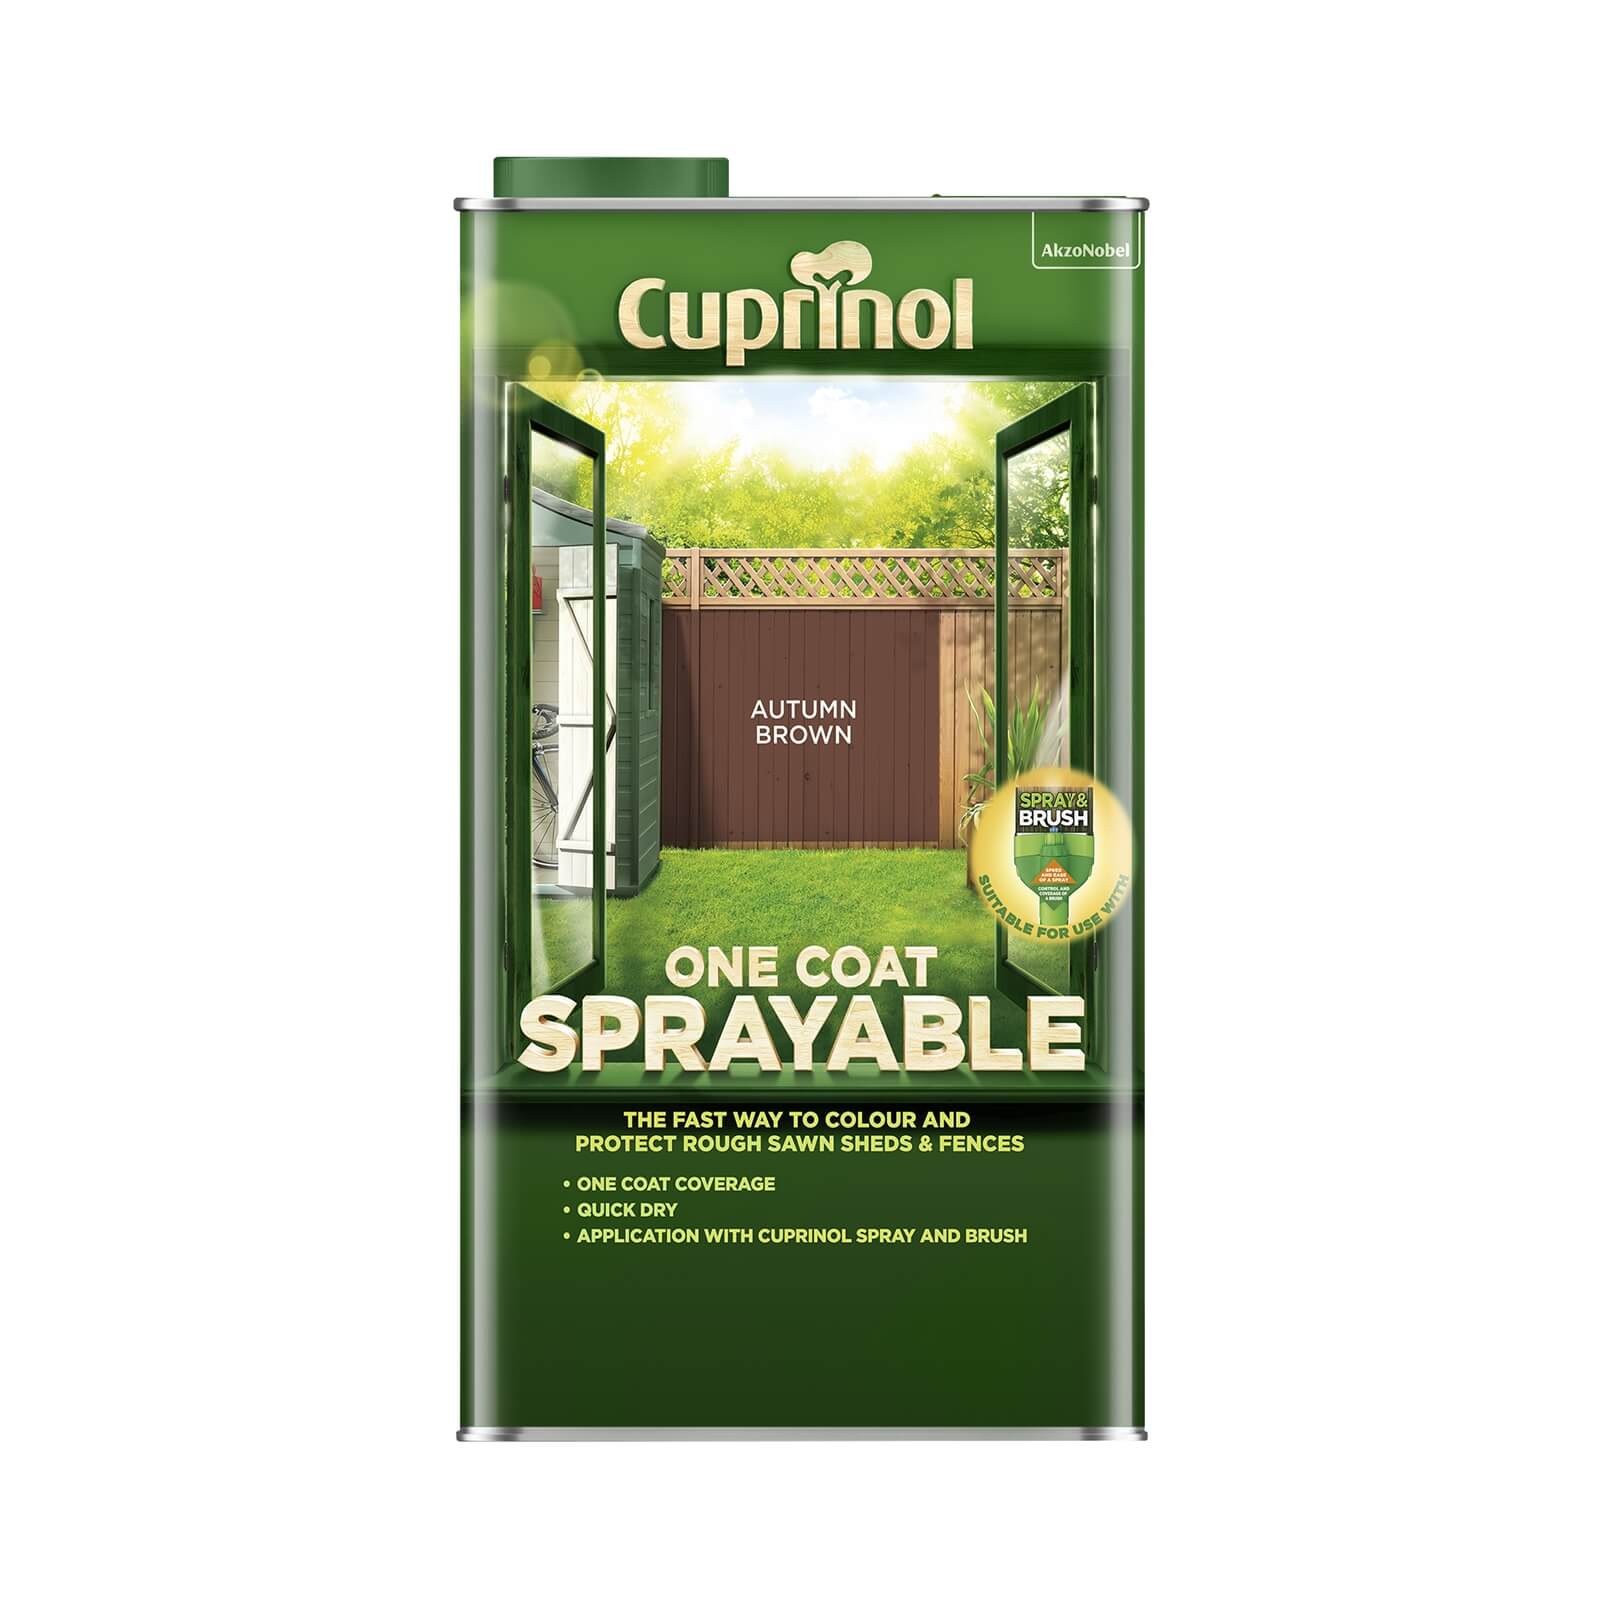 Cuprinol One Coat Sprayable Shed & Fence Paint Paint Autumn Brown - 5L